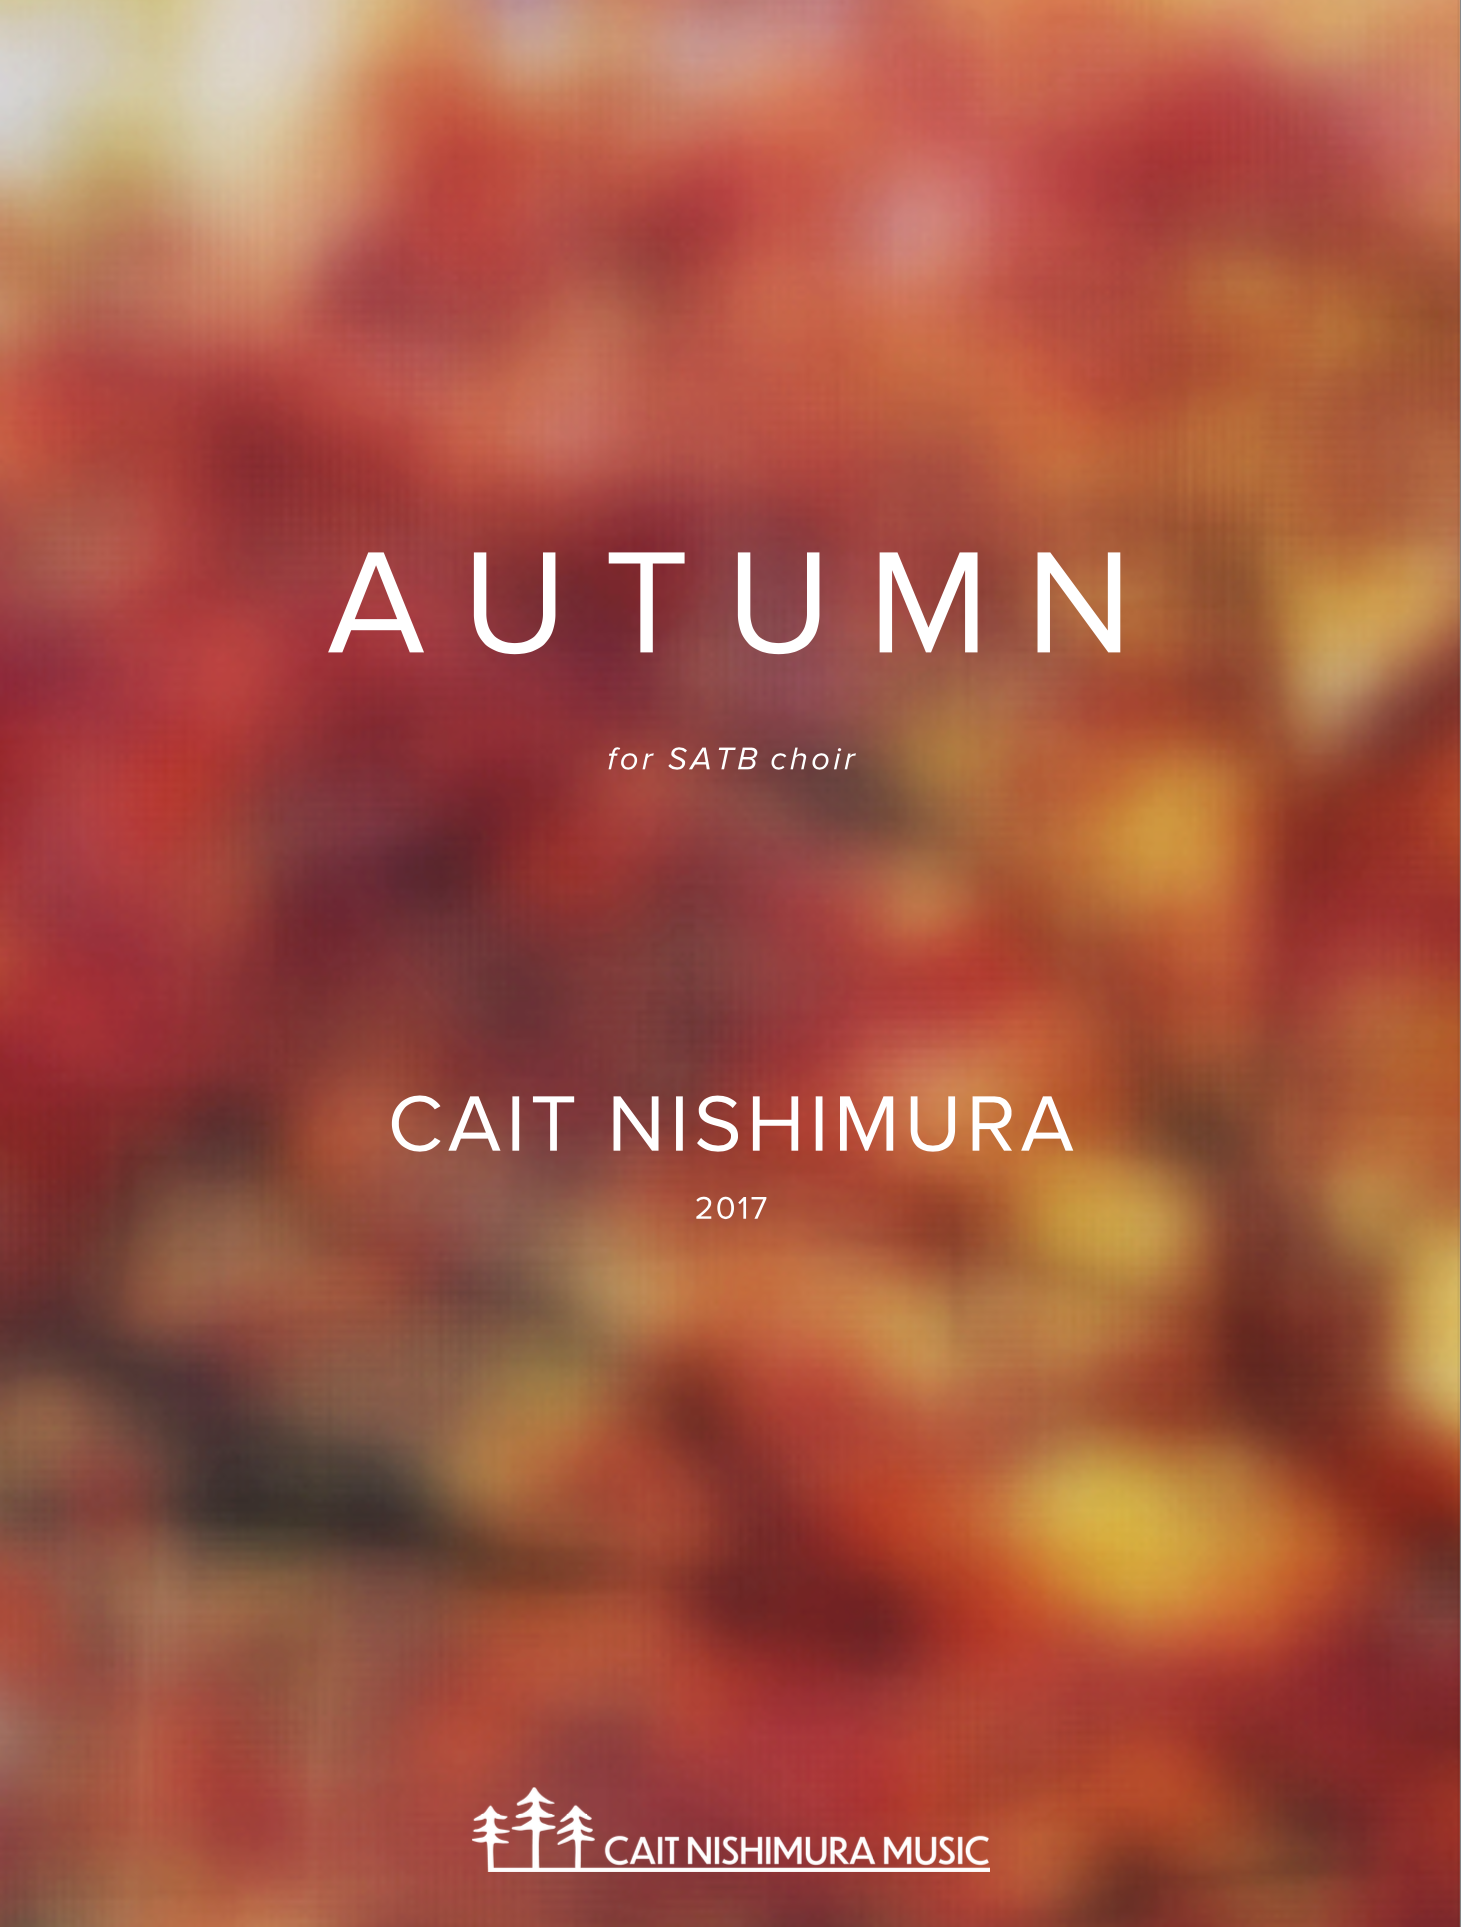 Autumn (Choral Version) by Cait Nishimura